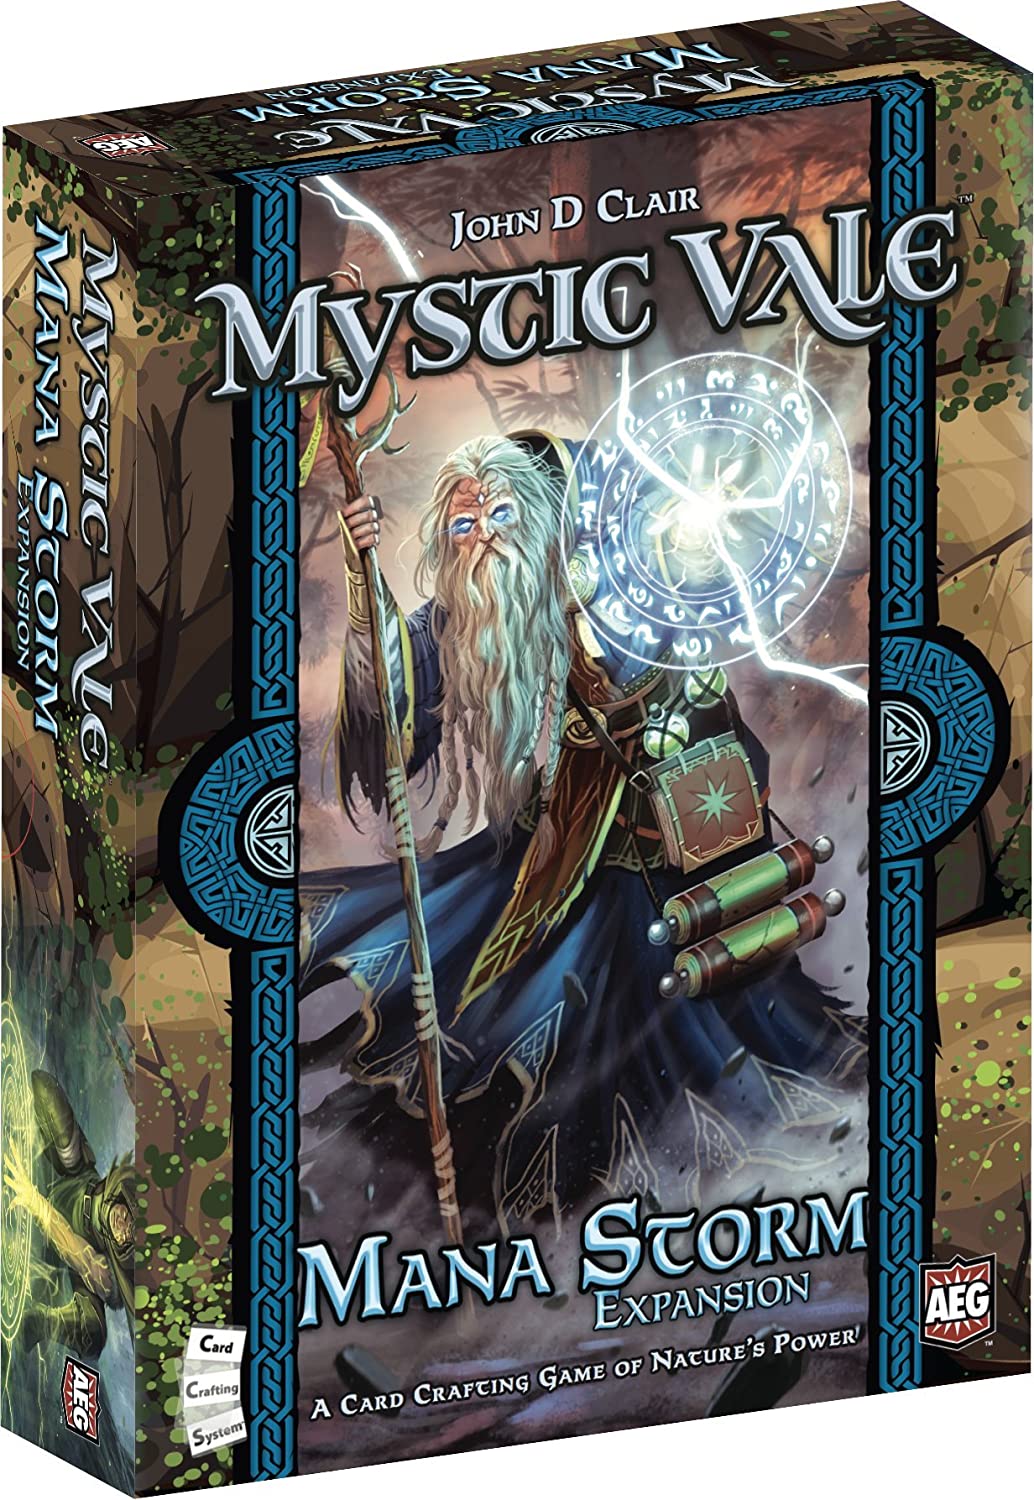 (BSG Certified USED) Mystic Vale - Mana Storm